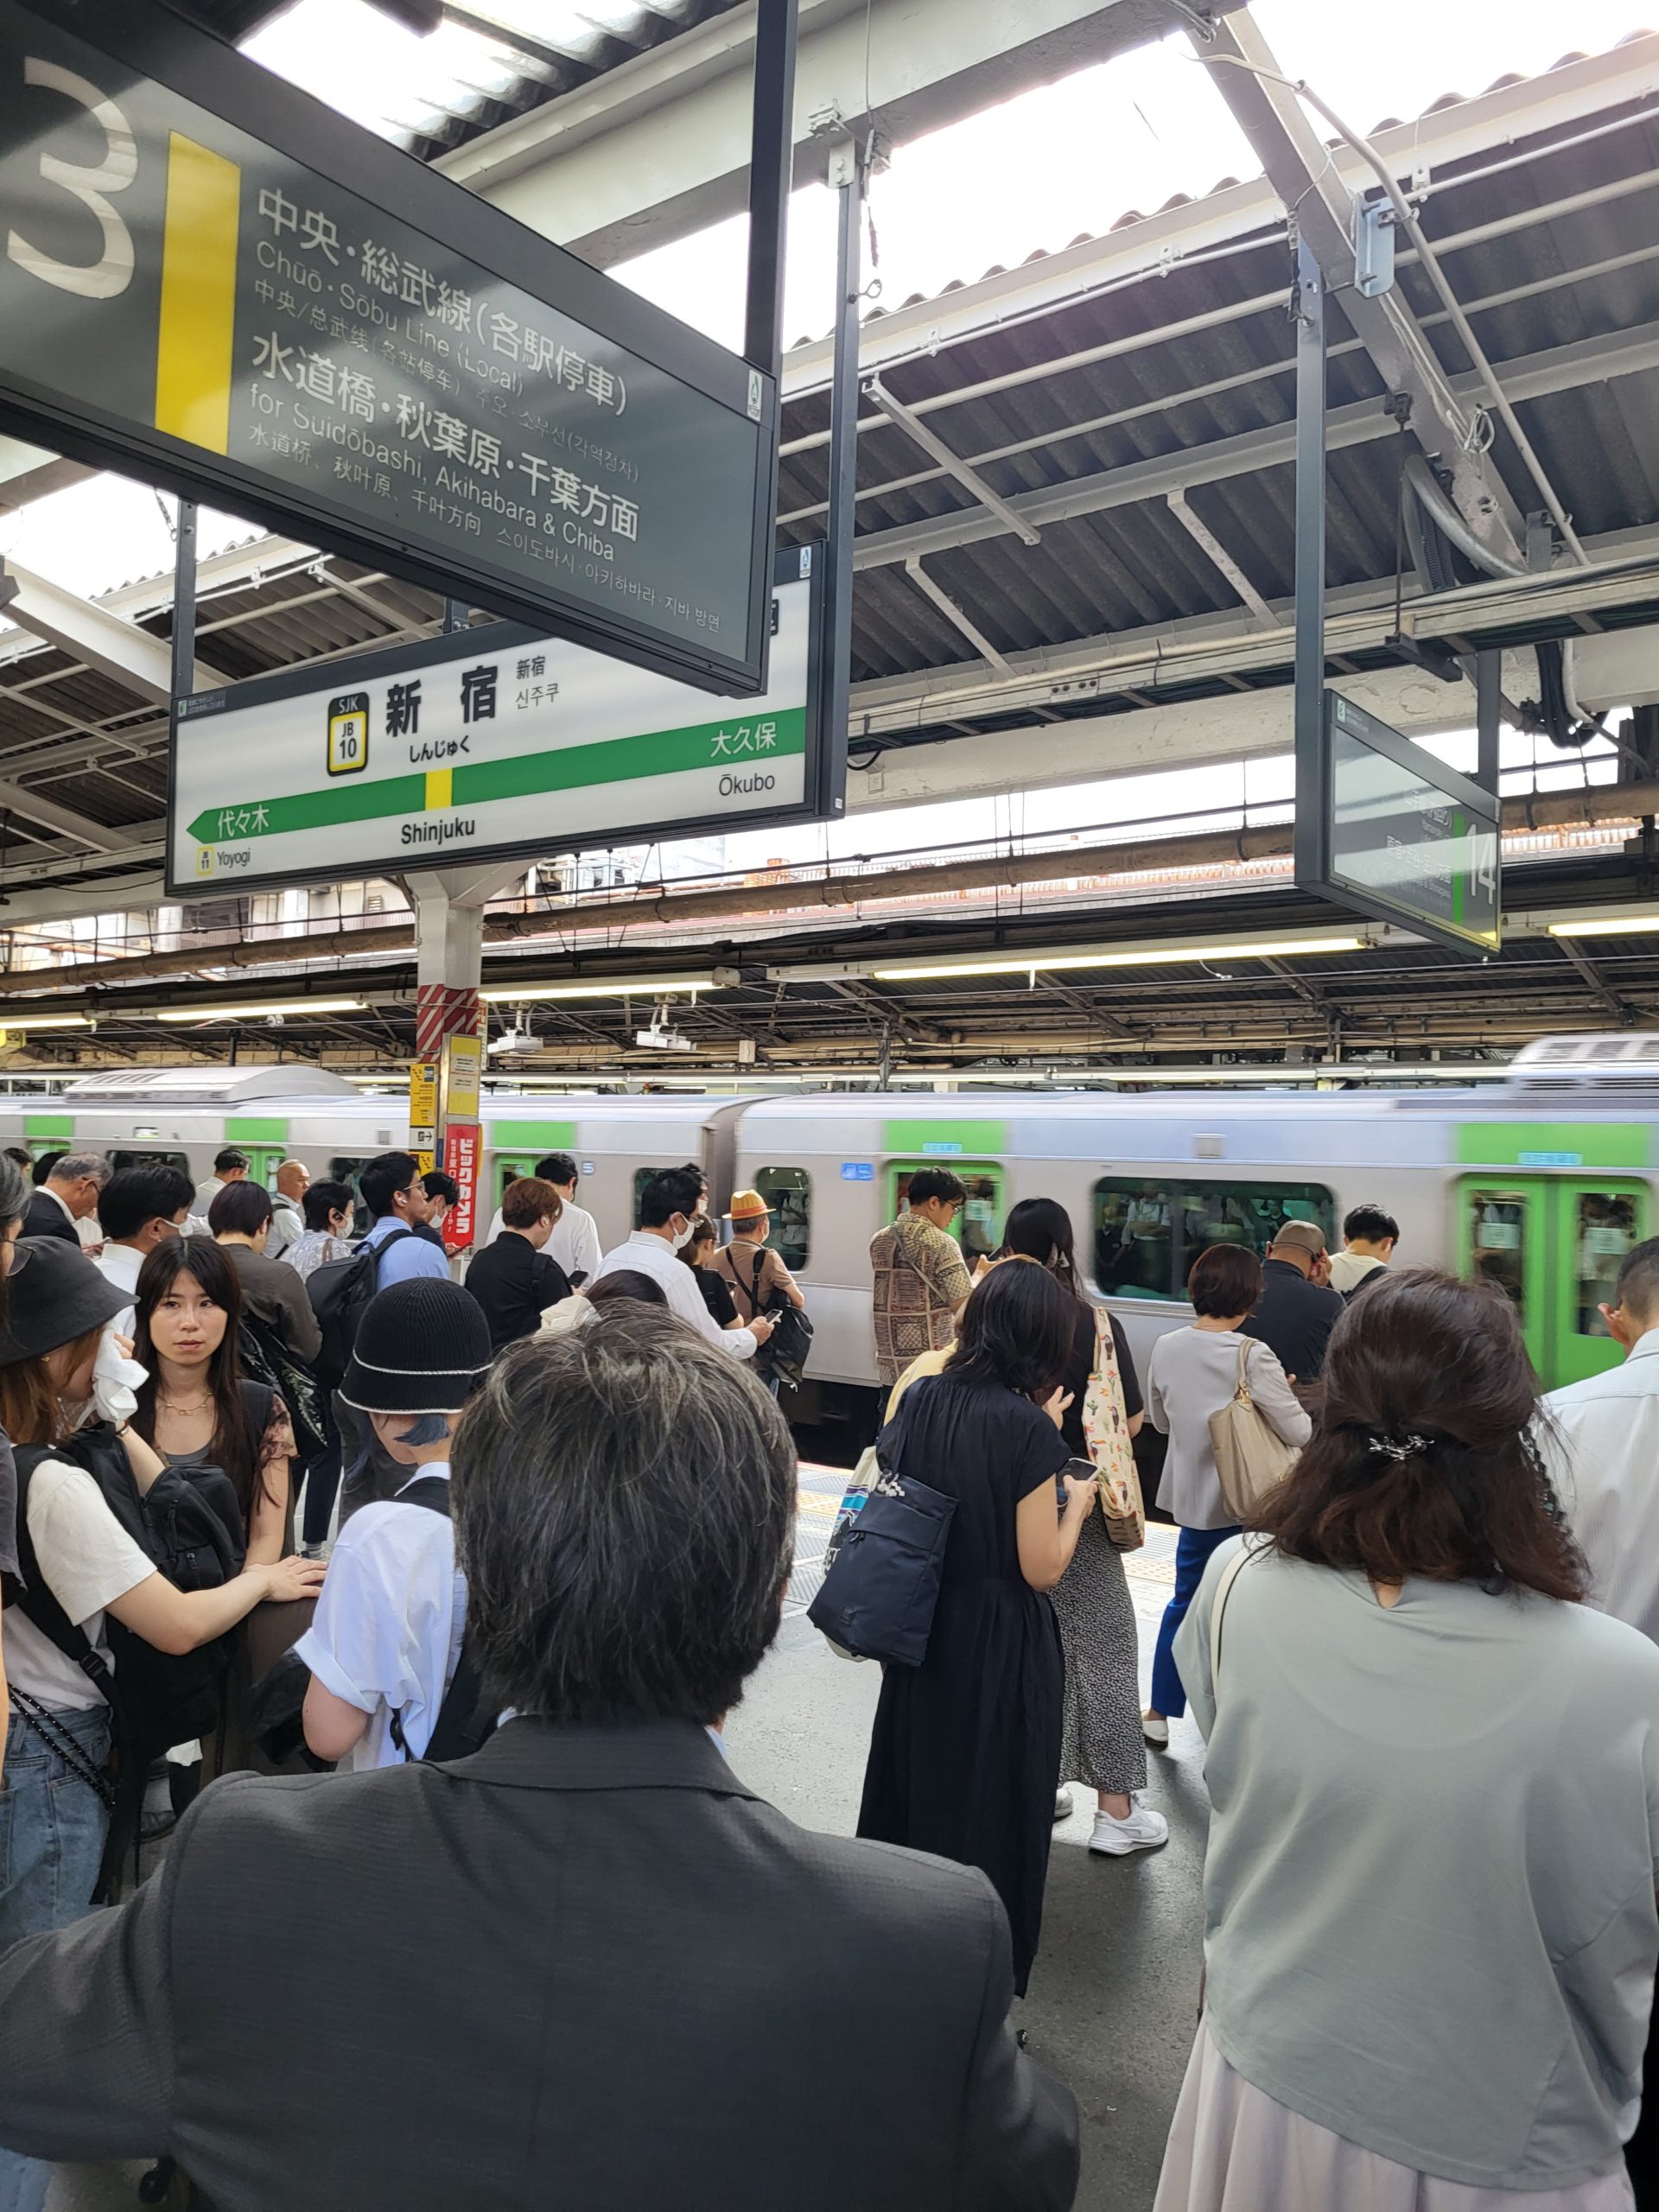 Yamanote-line